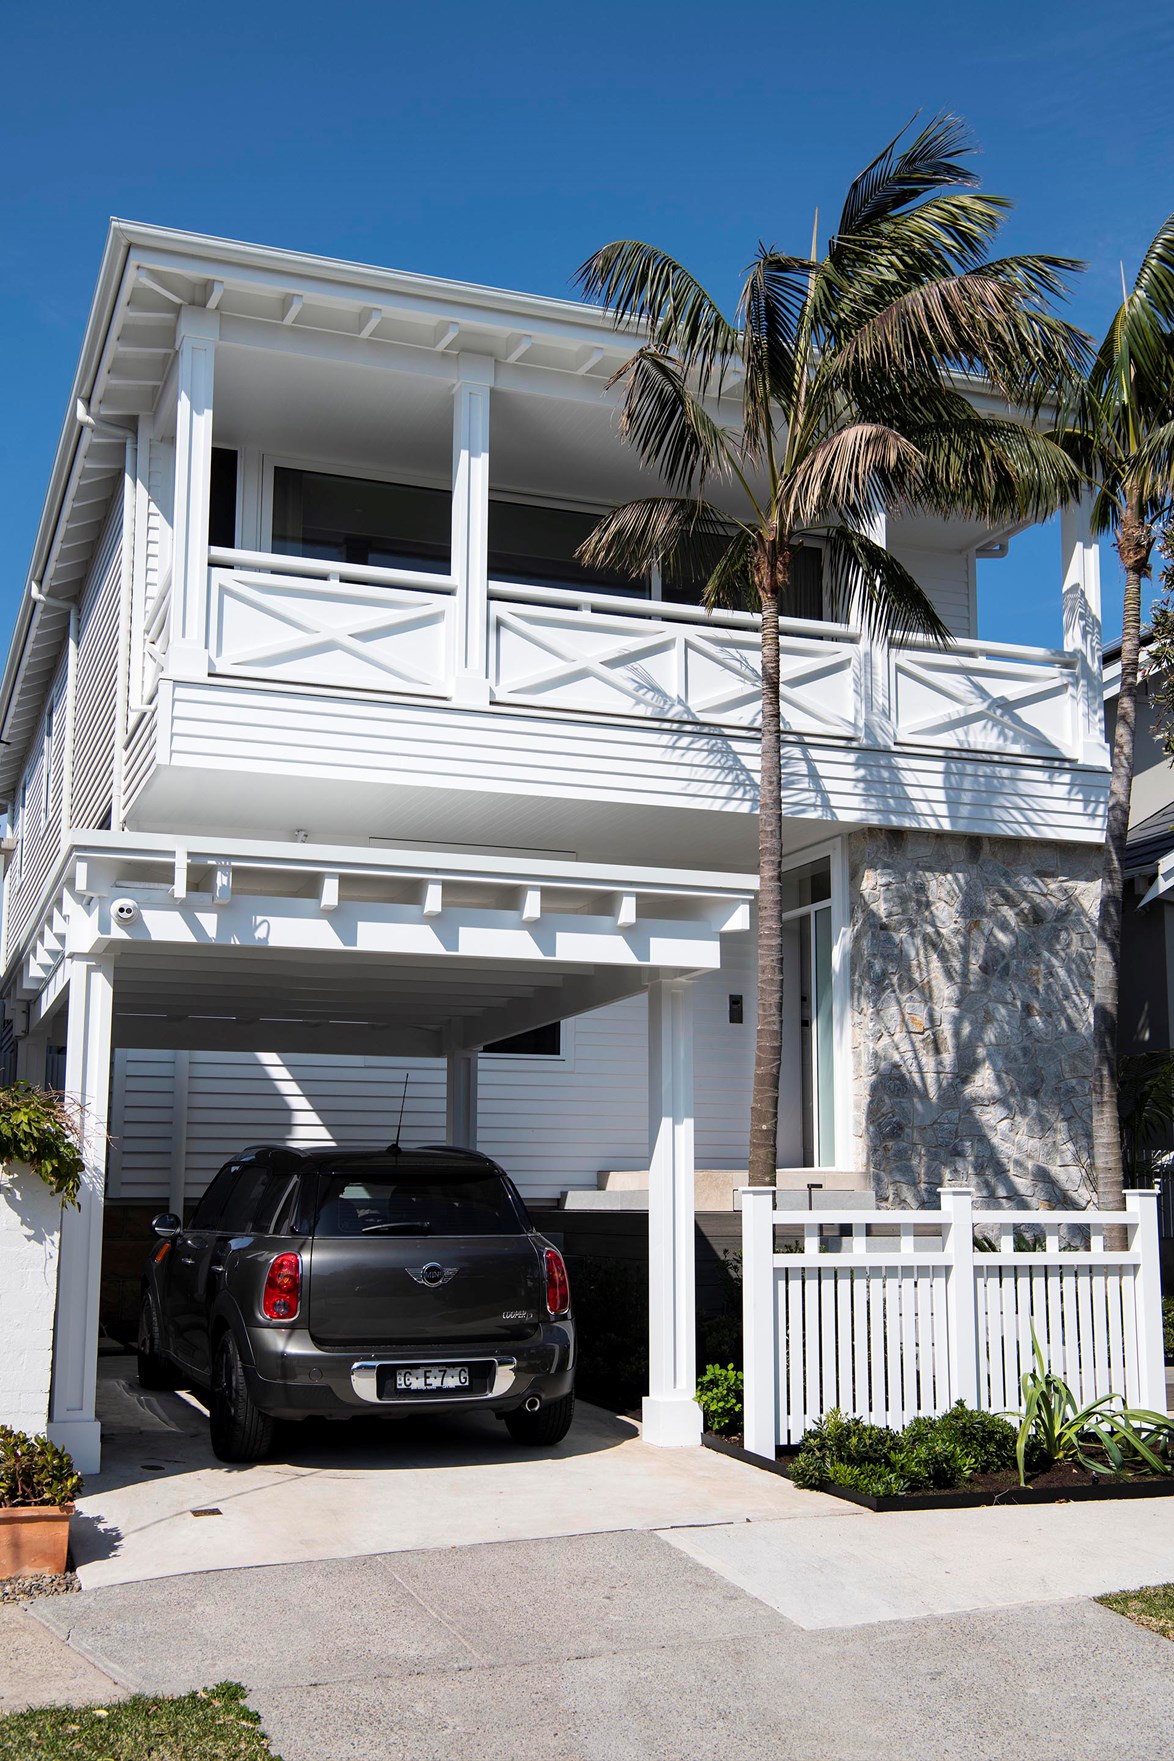 Sycon Linea cladding creates a classic Hamptons exterior.